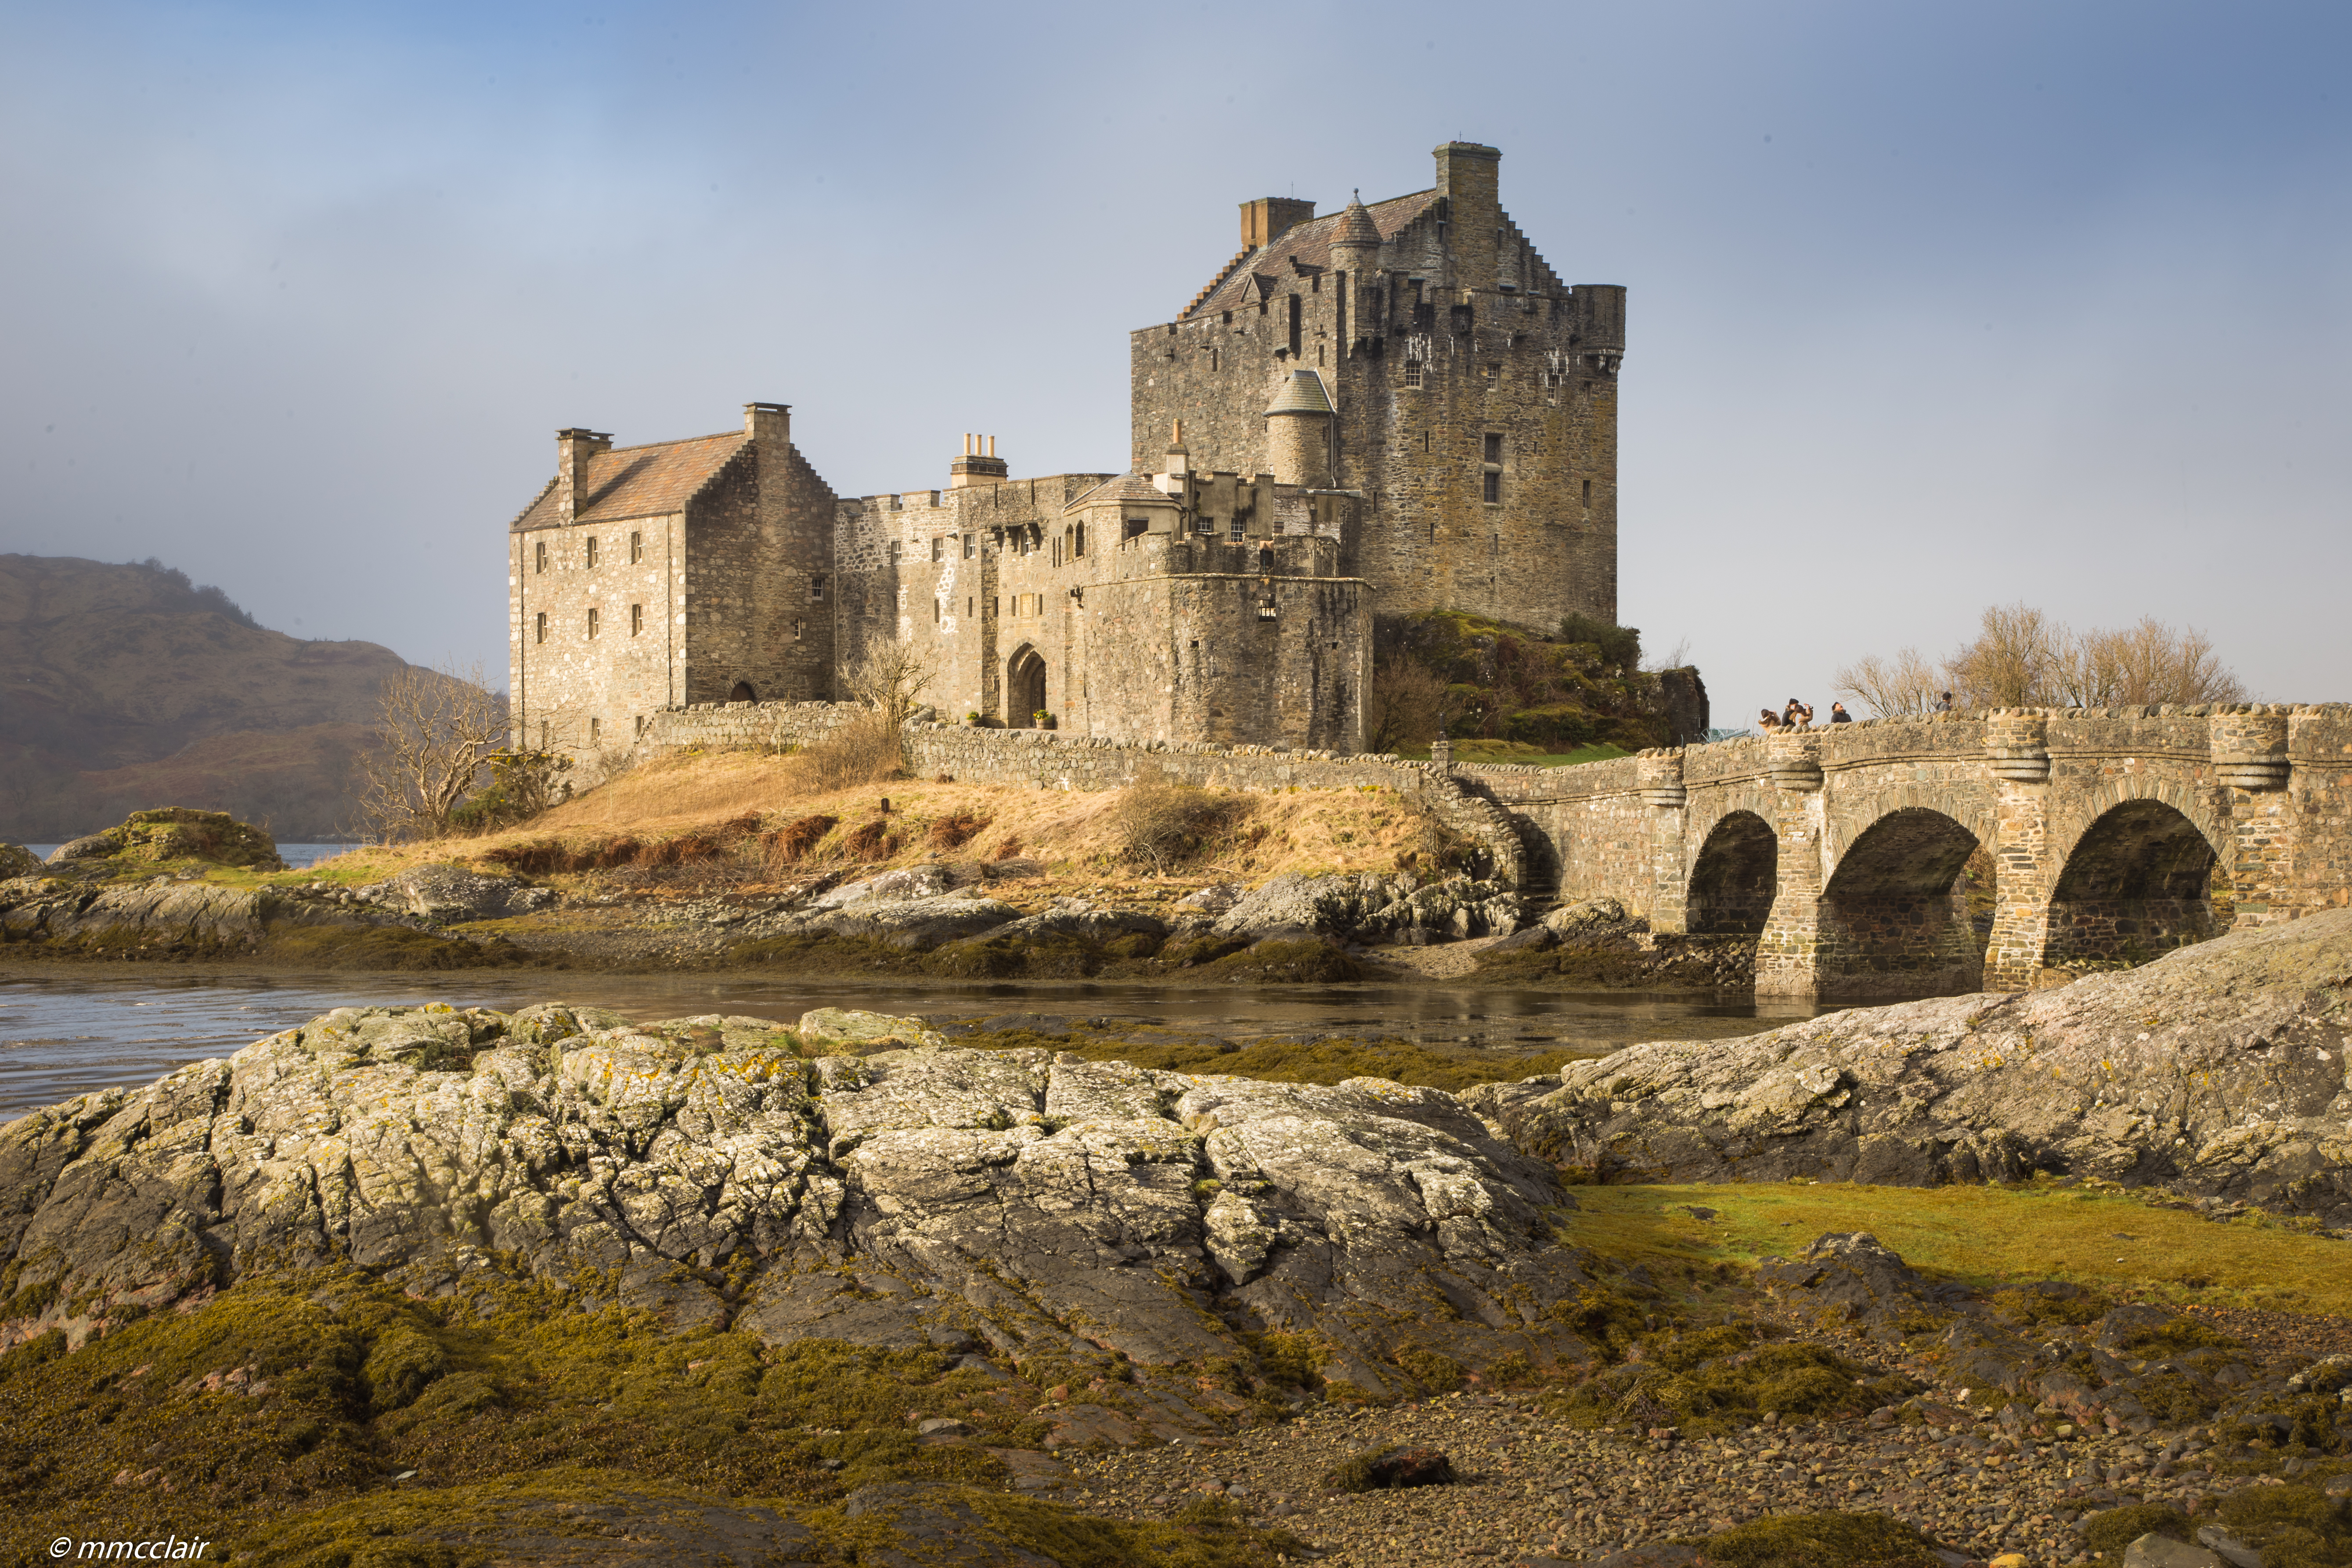 Village крепость. Эйлен Донан Шотландия. Замок Эйлен-Донан, Великобритания. Шотландский замок Эйлен Донан. Замок Эйлен-Донан, Шотландия Западная Европа.